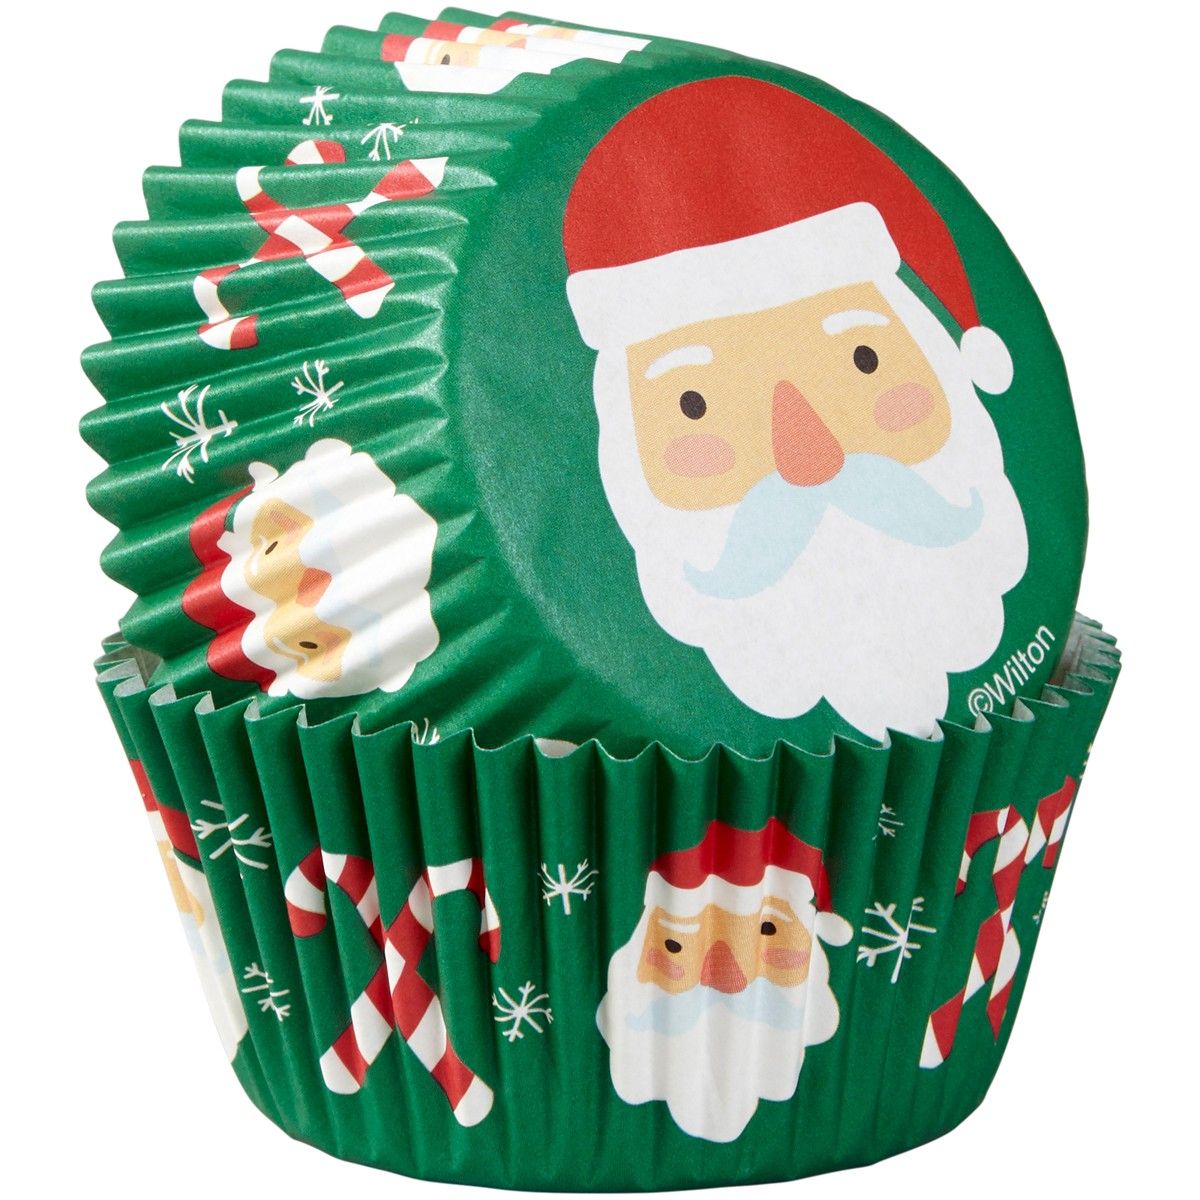 Wilton Cupcake Förmchen Santa & Zuckerstangen 75 Stück